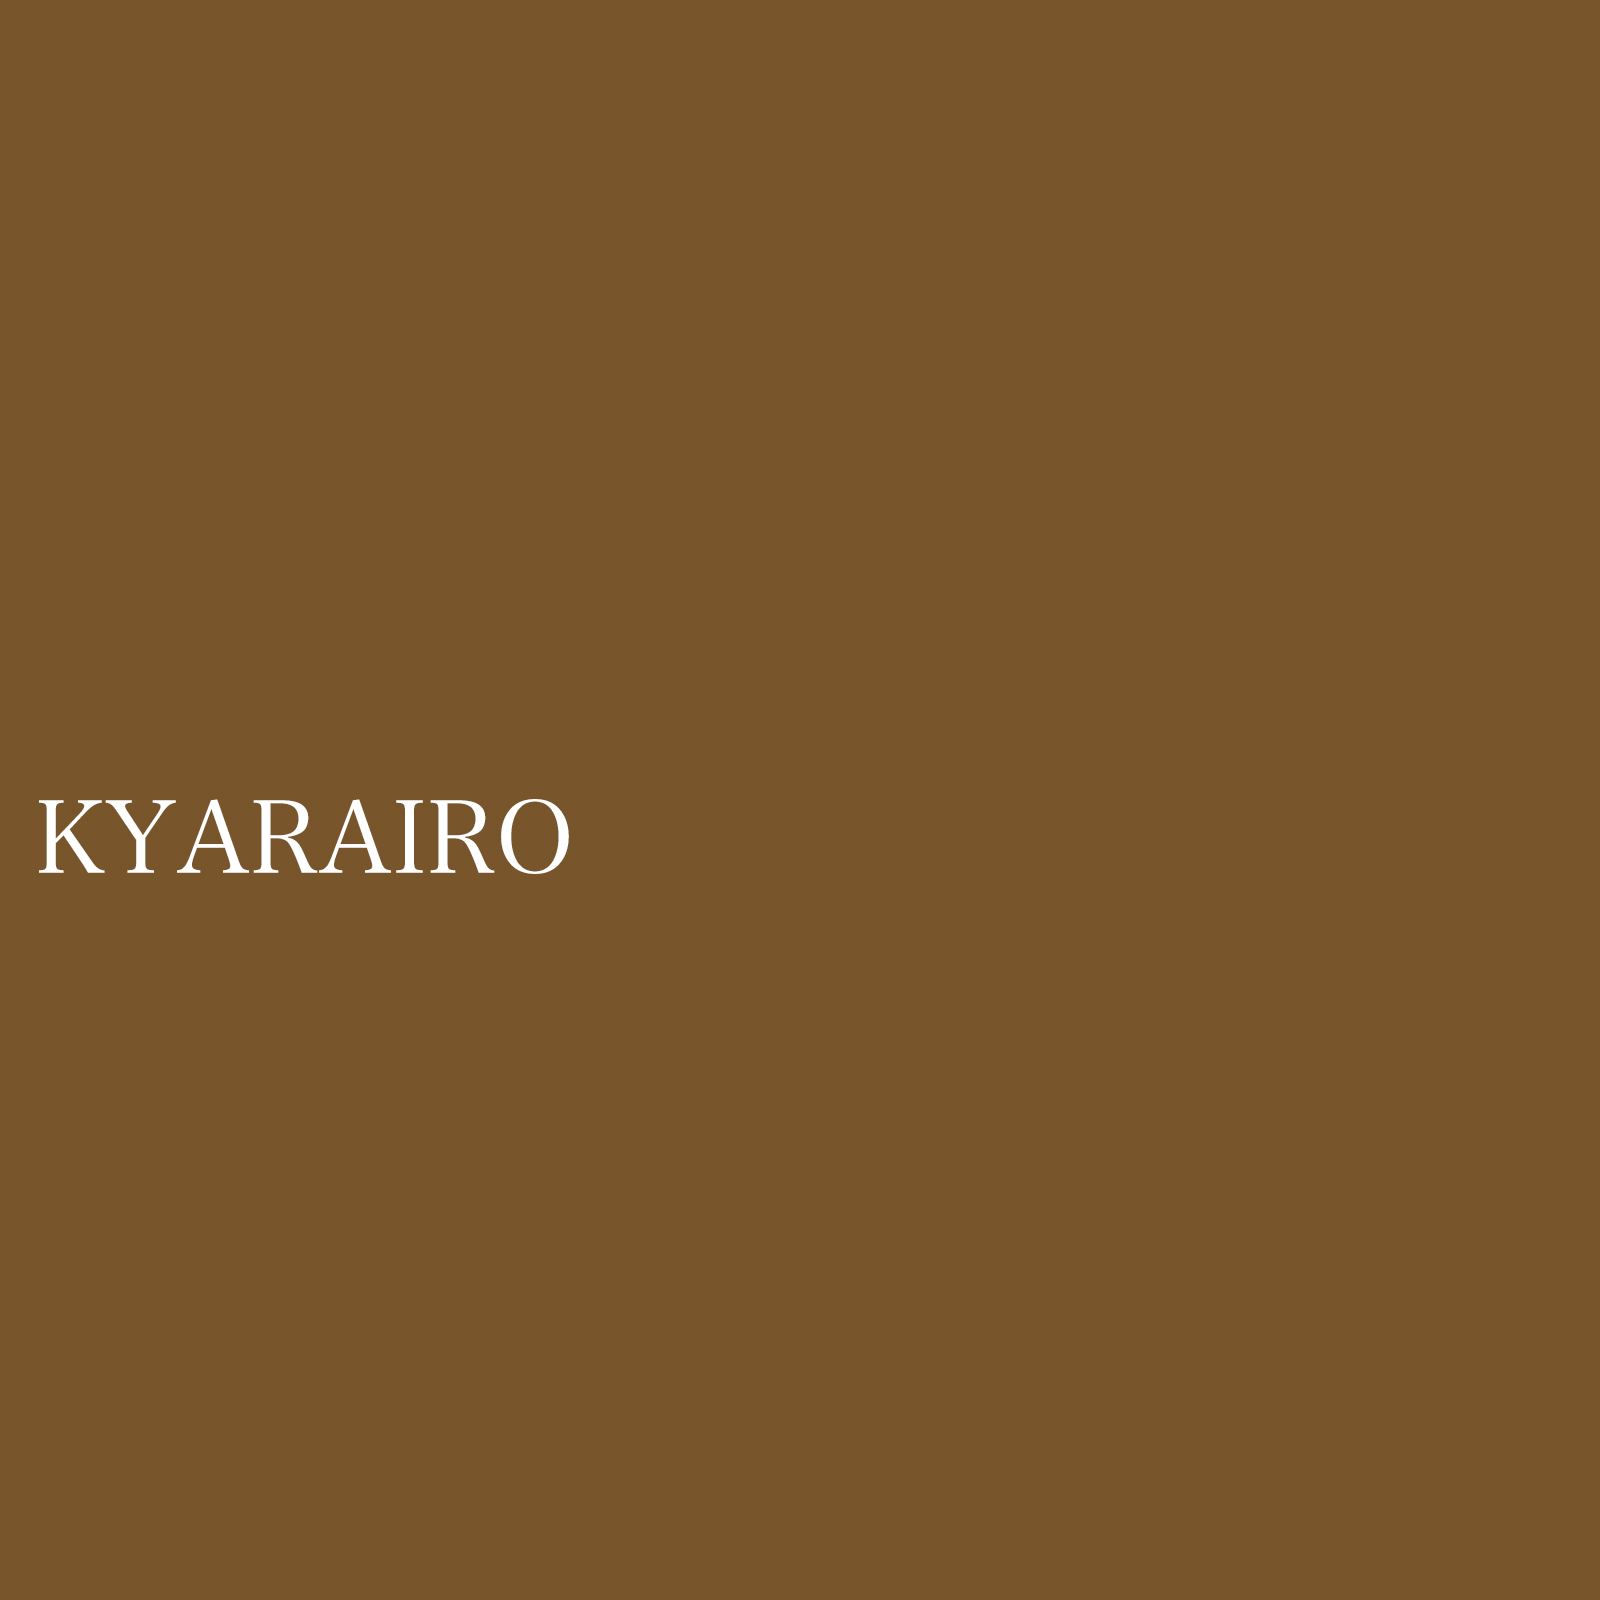 kyrairo.jpg